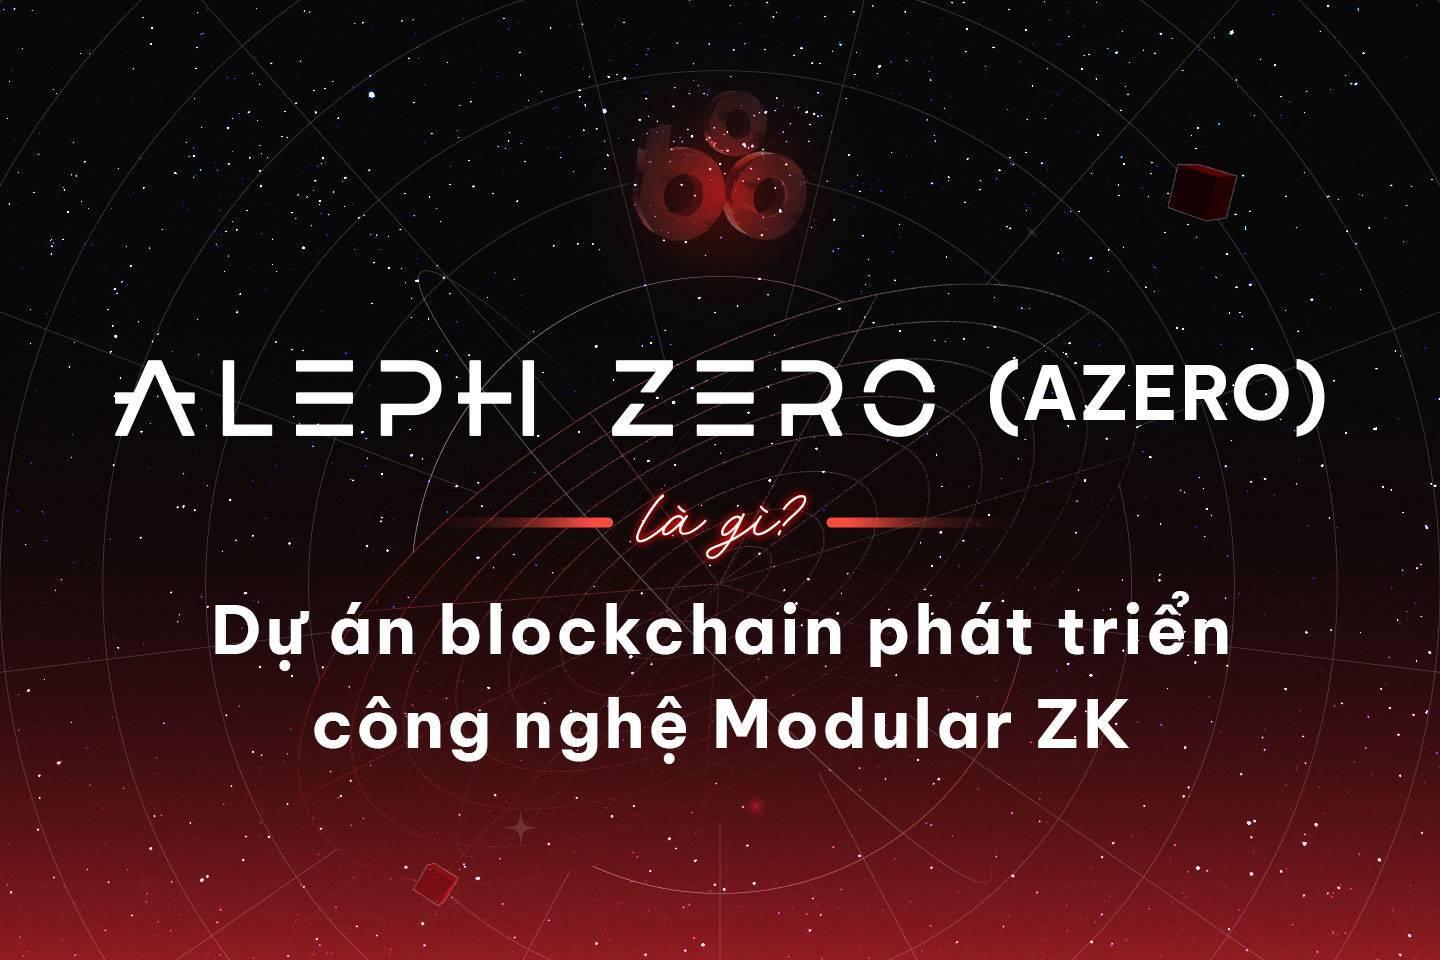 aleph-zero-azero-la-gi-du-an-blockchain-phat-trien-cong-nghe-modular-zk